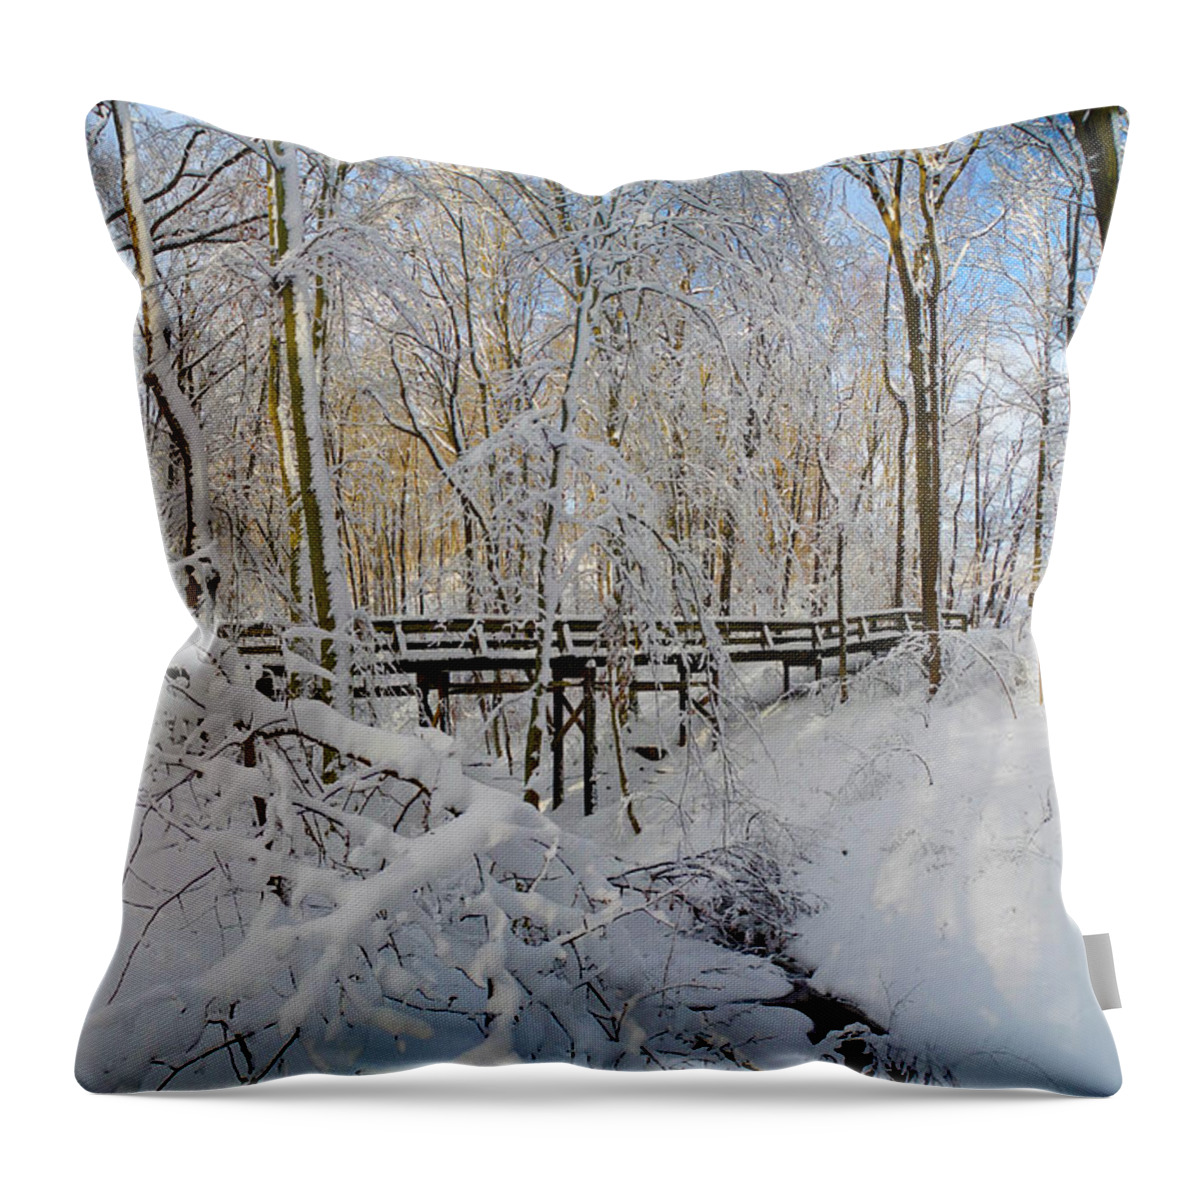 Snow Bridge Throw Pillow featuring the photograph Snow Bridge by Raymond Salani III